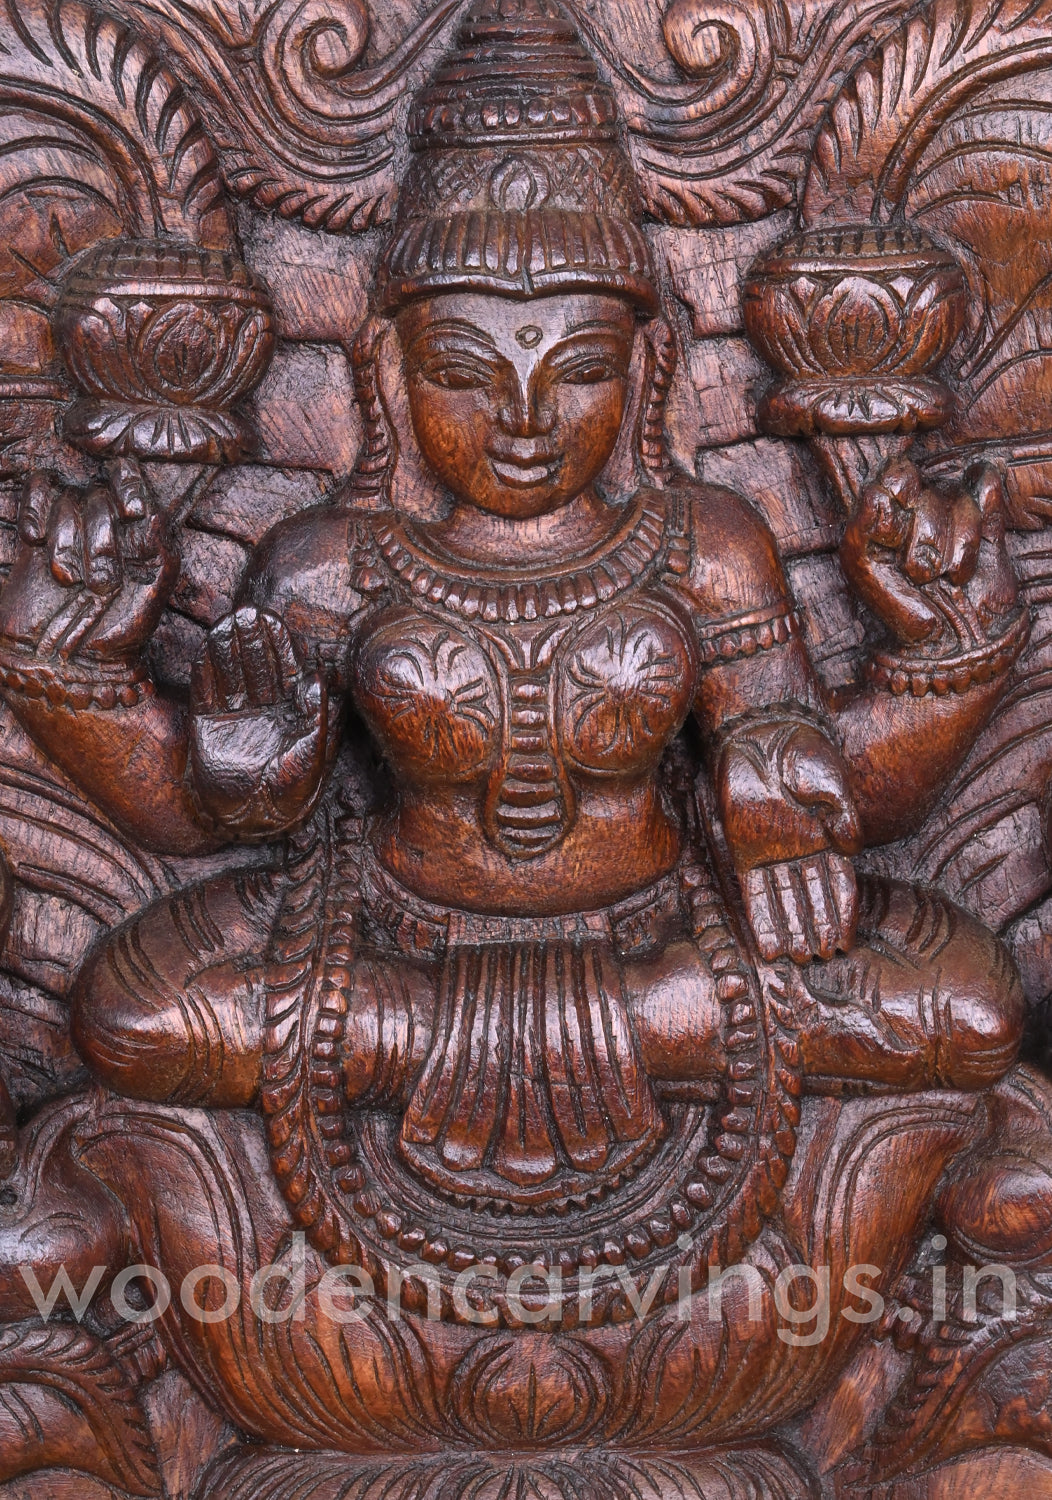 Square Light Weight Goddess GajaLakshmi on Lotus Wall Decor Wooden Hooks Fixed Wall Mount 12"